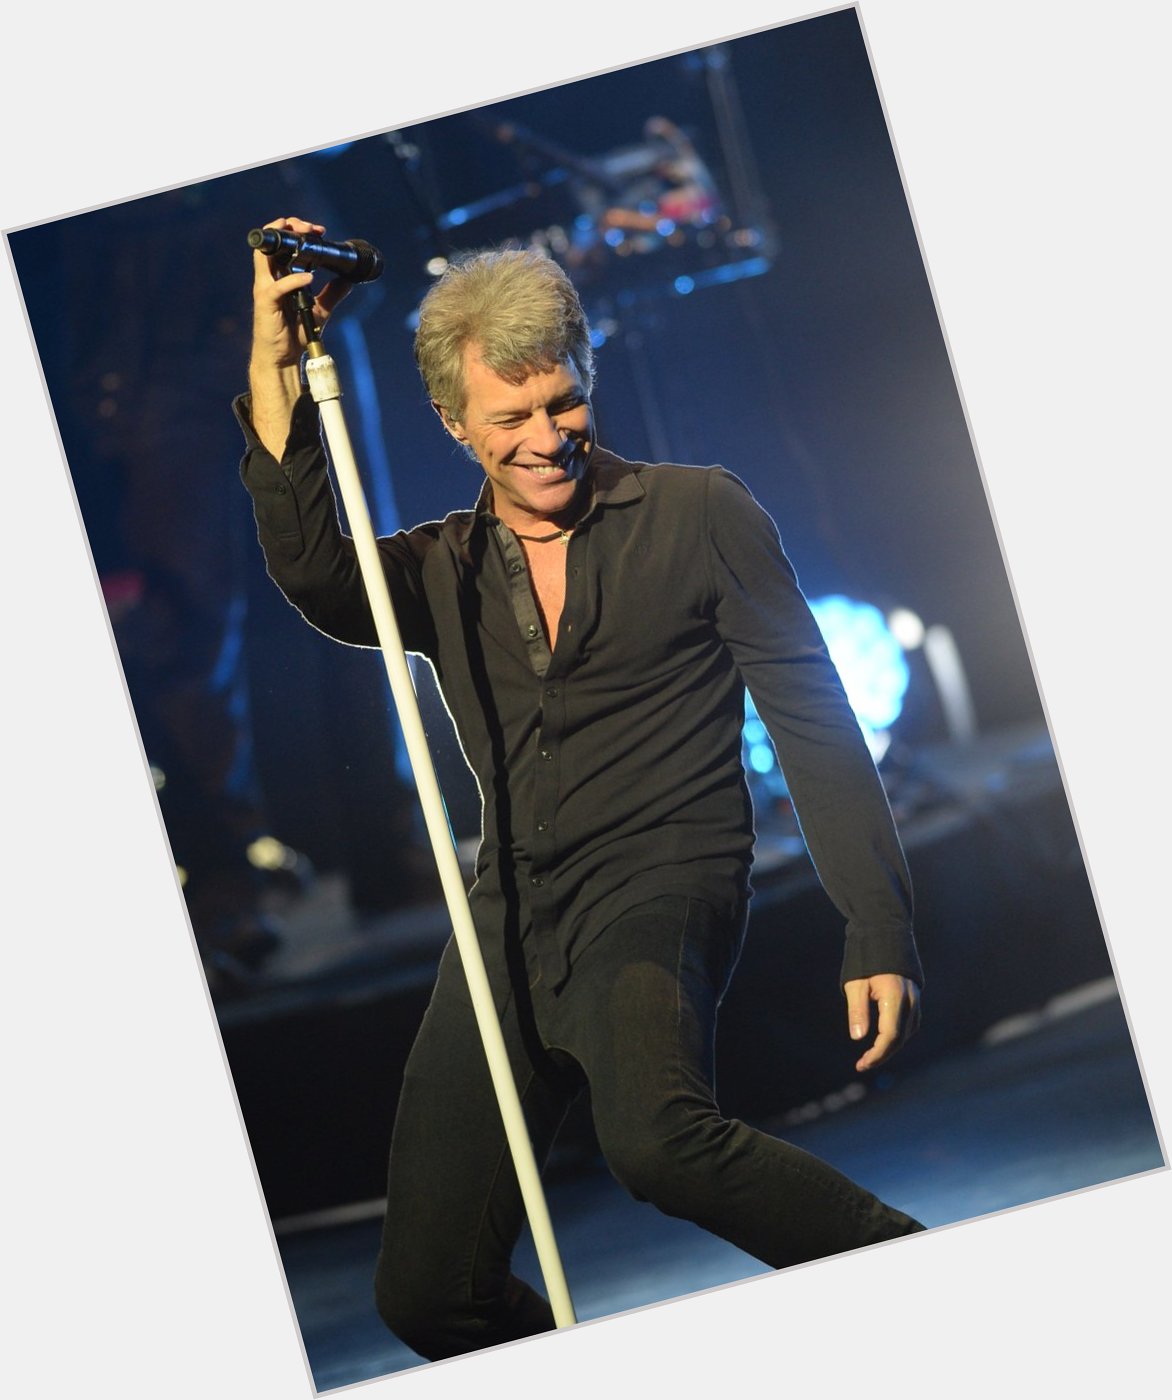 Happy 55th bday to Mr. Jon Bon Jovi 